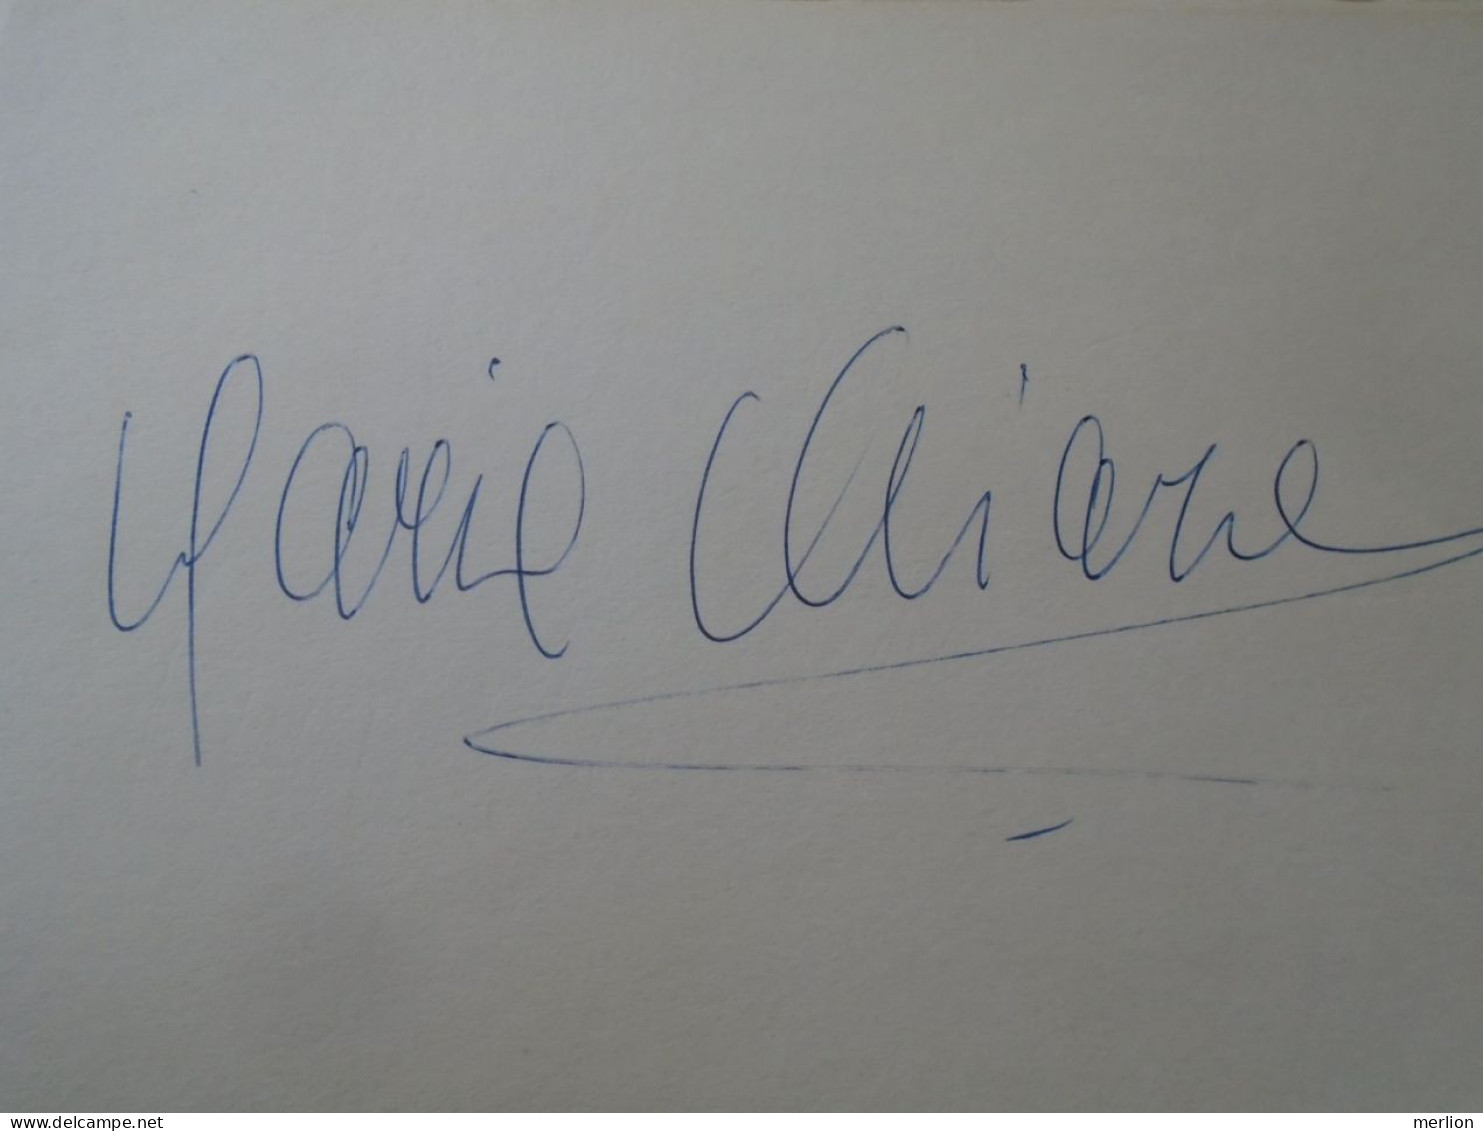 D203334  Signature -Autograph  - Maria Chiara  - Italia  Opera  -Soprano  1981 - Chanteurs & Musiciens